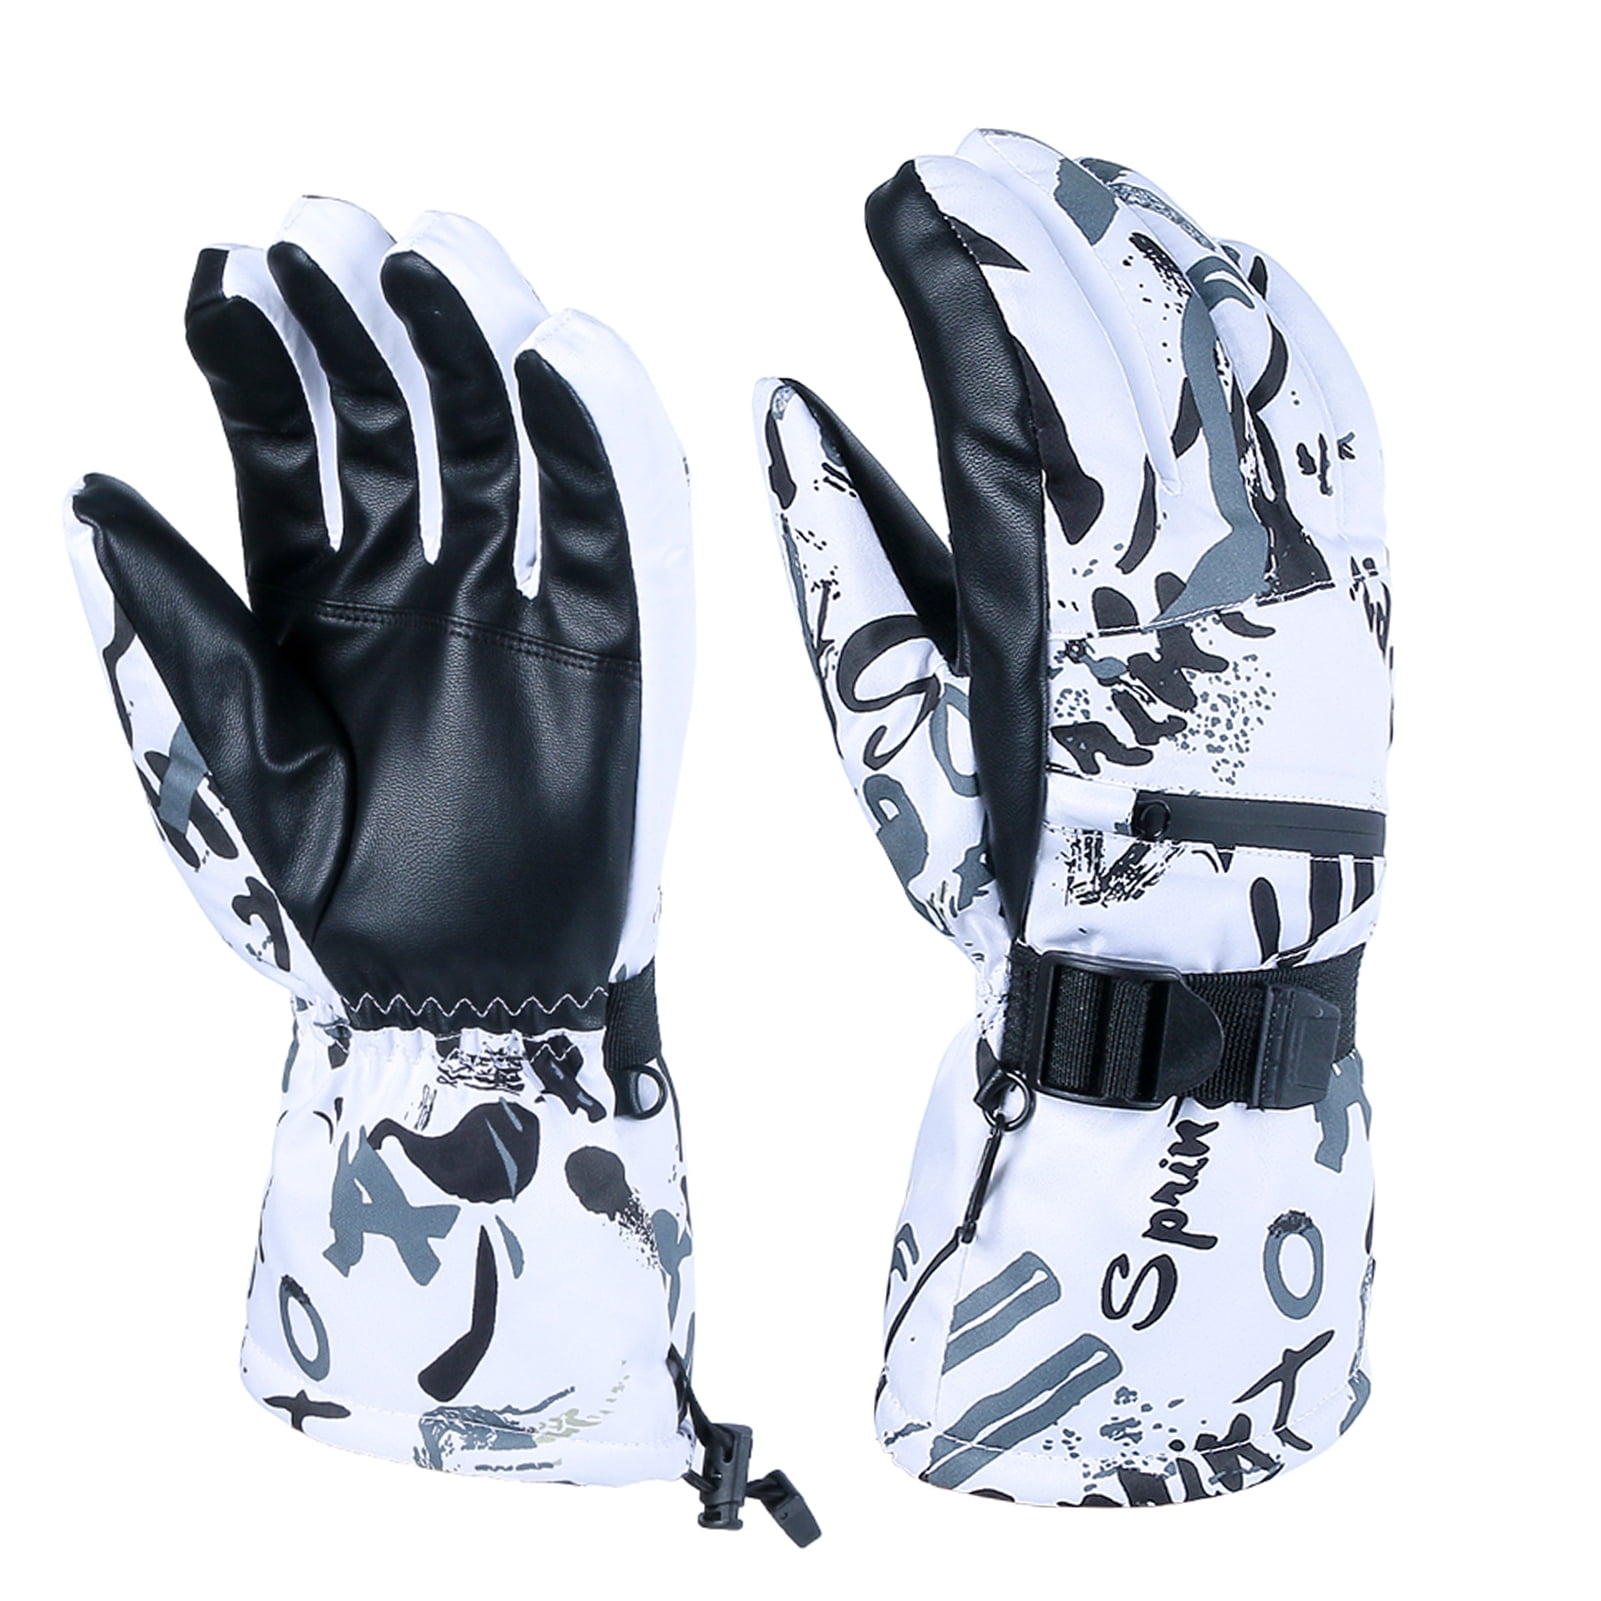 Waterproof Snow Ski Gloves Windproof Hand Warmers Adjustable Wrist Strap 